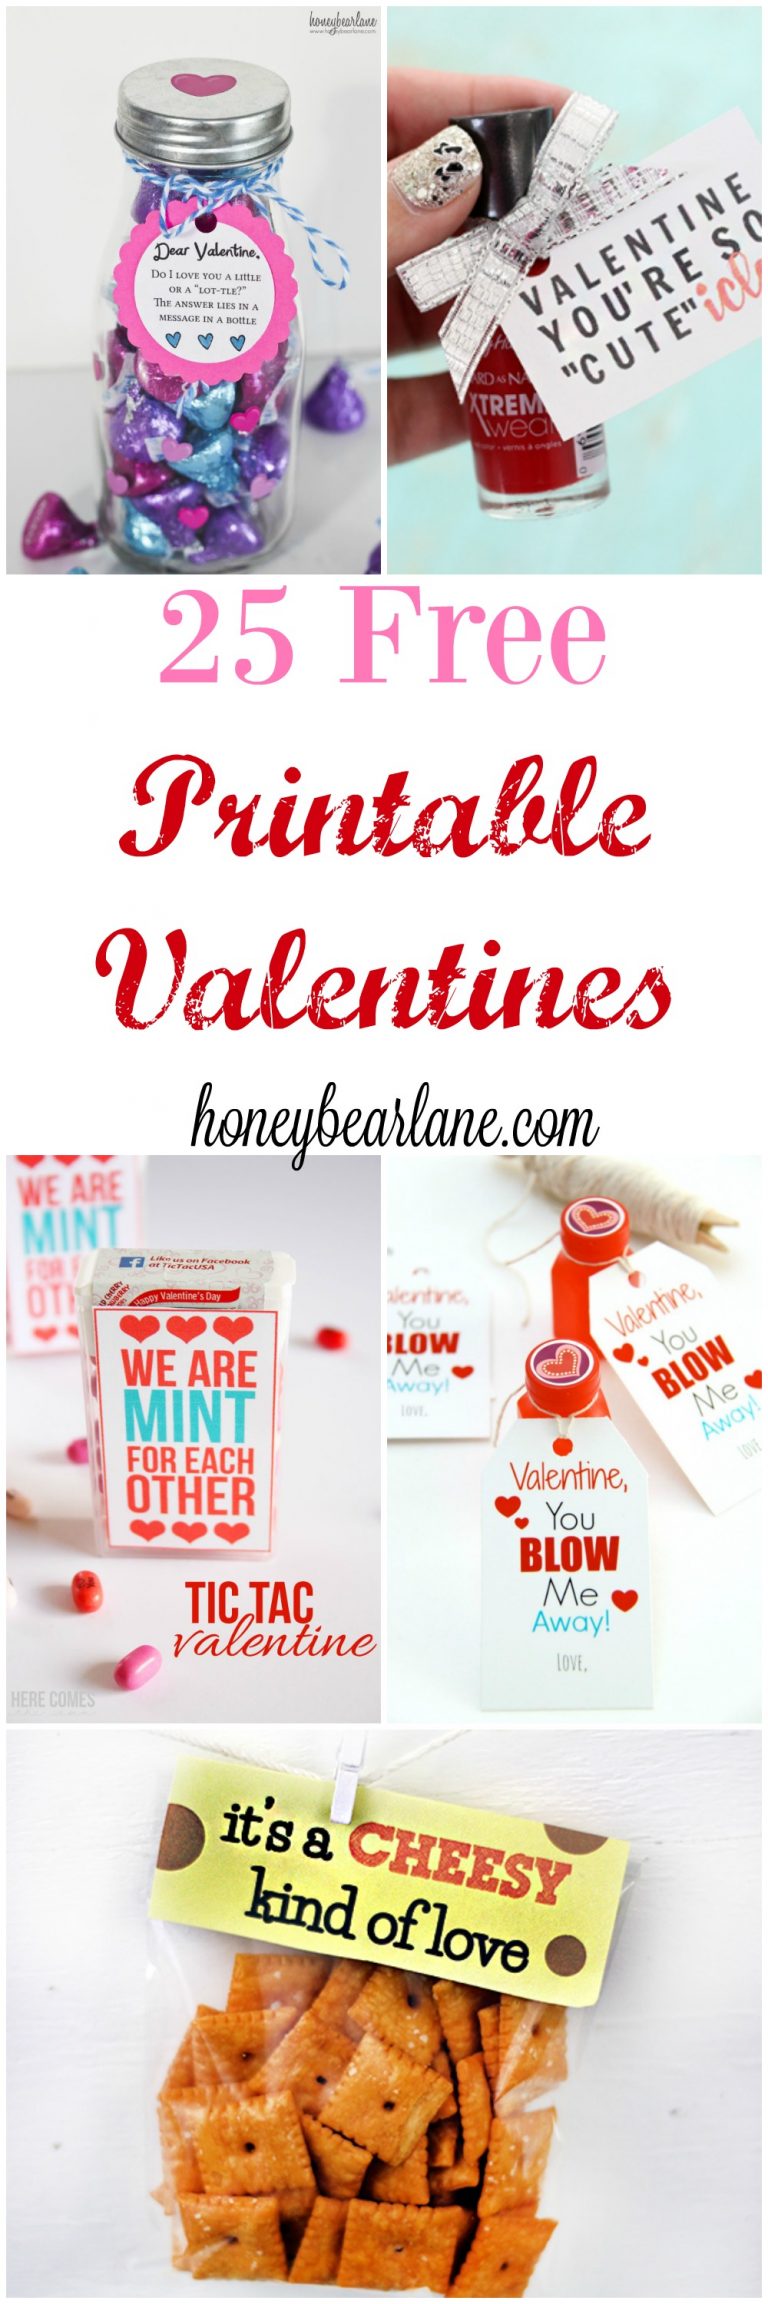 25 Free Printable Valentines - Honeybear Lane